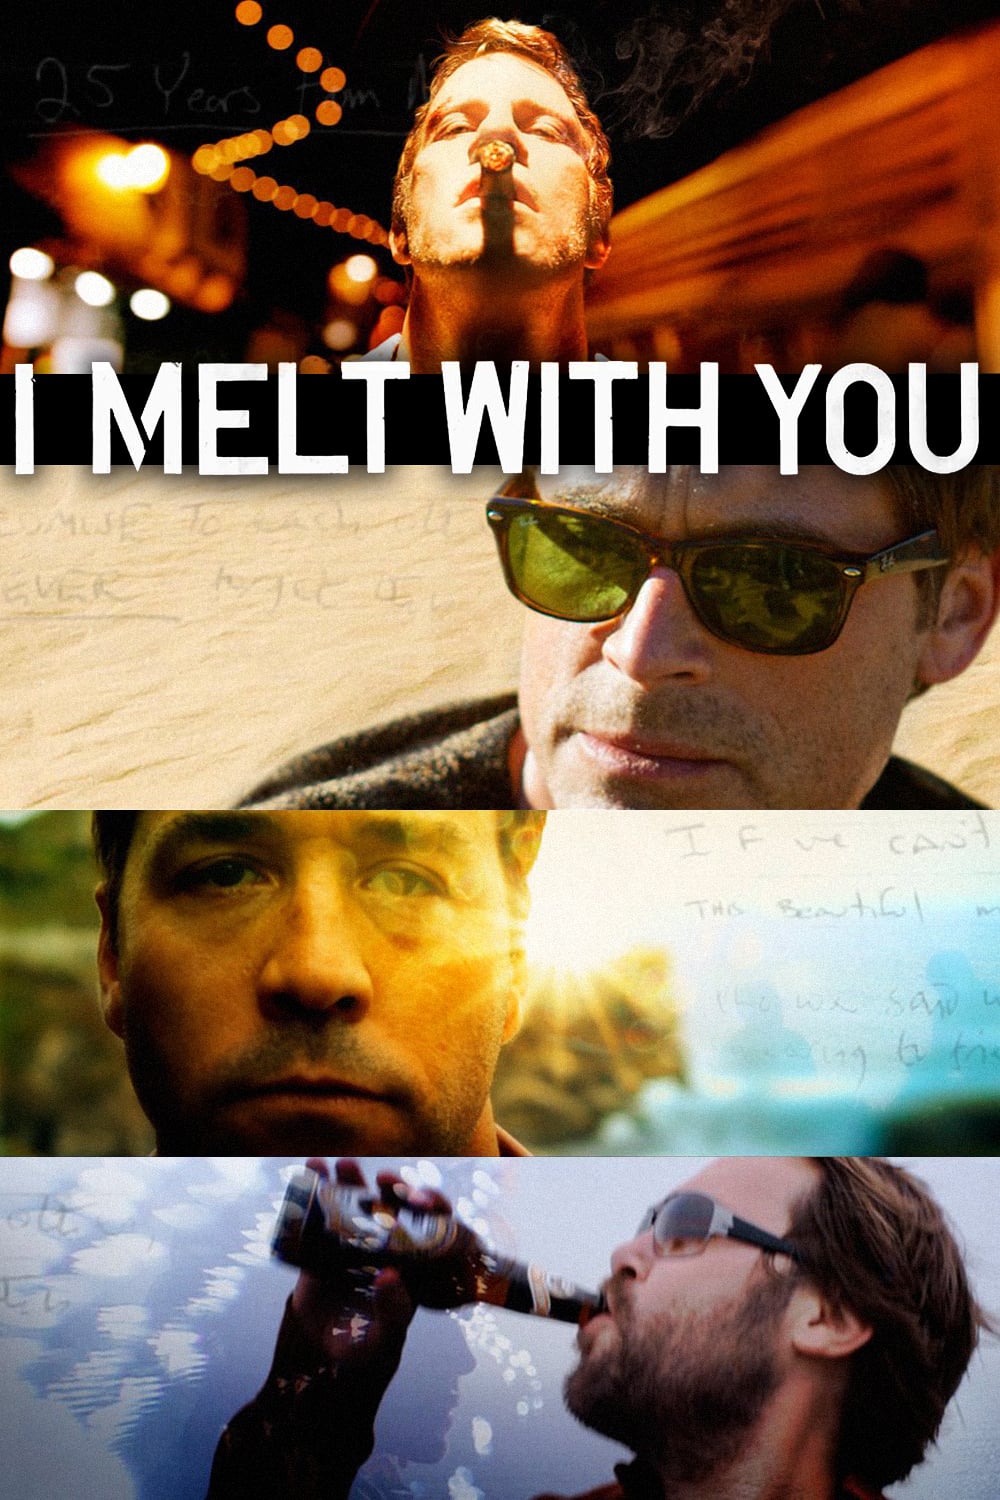 Plakat von "I Melt with You"